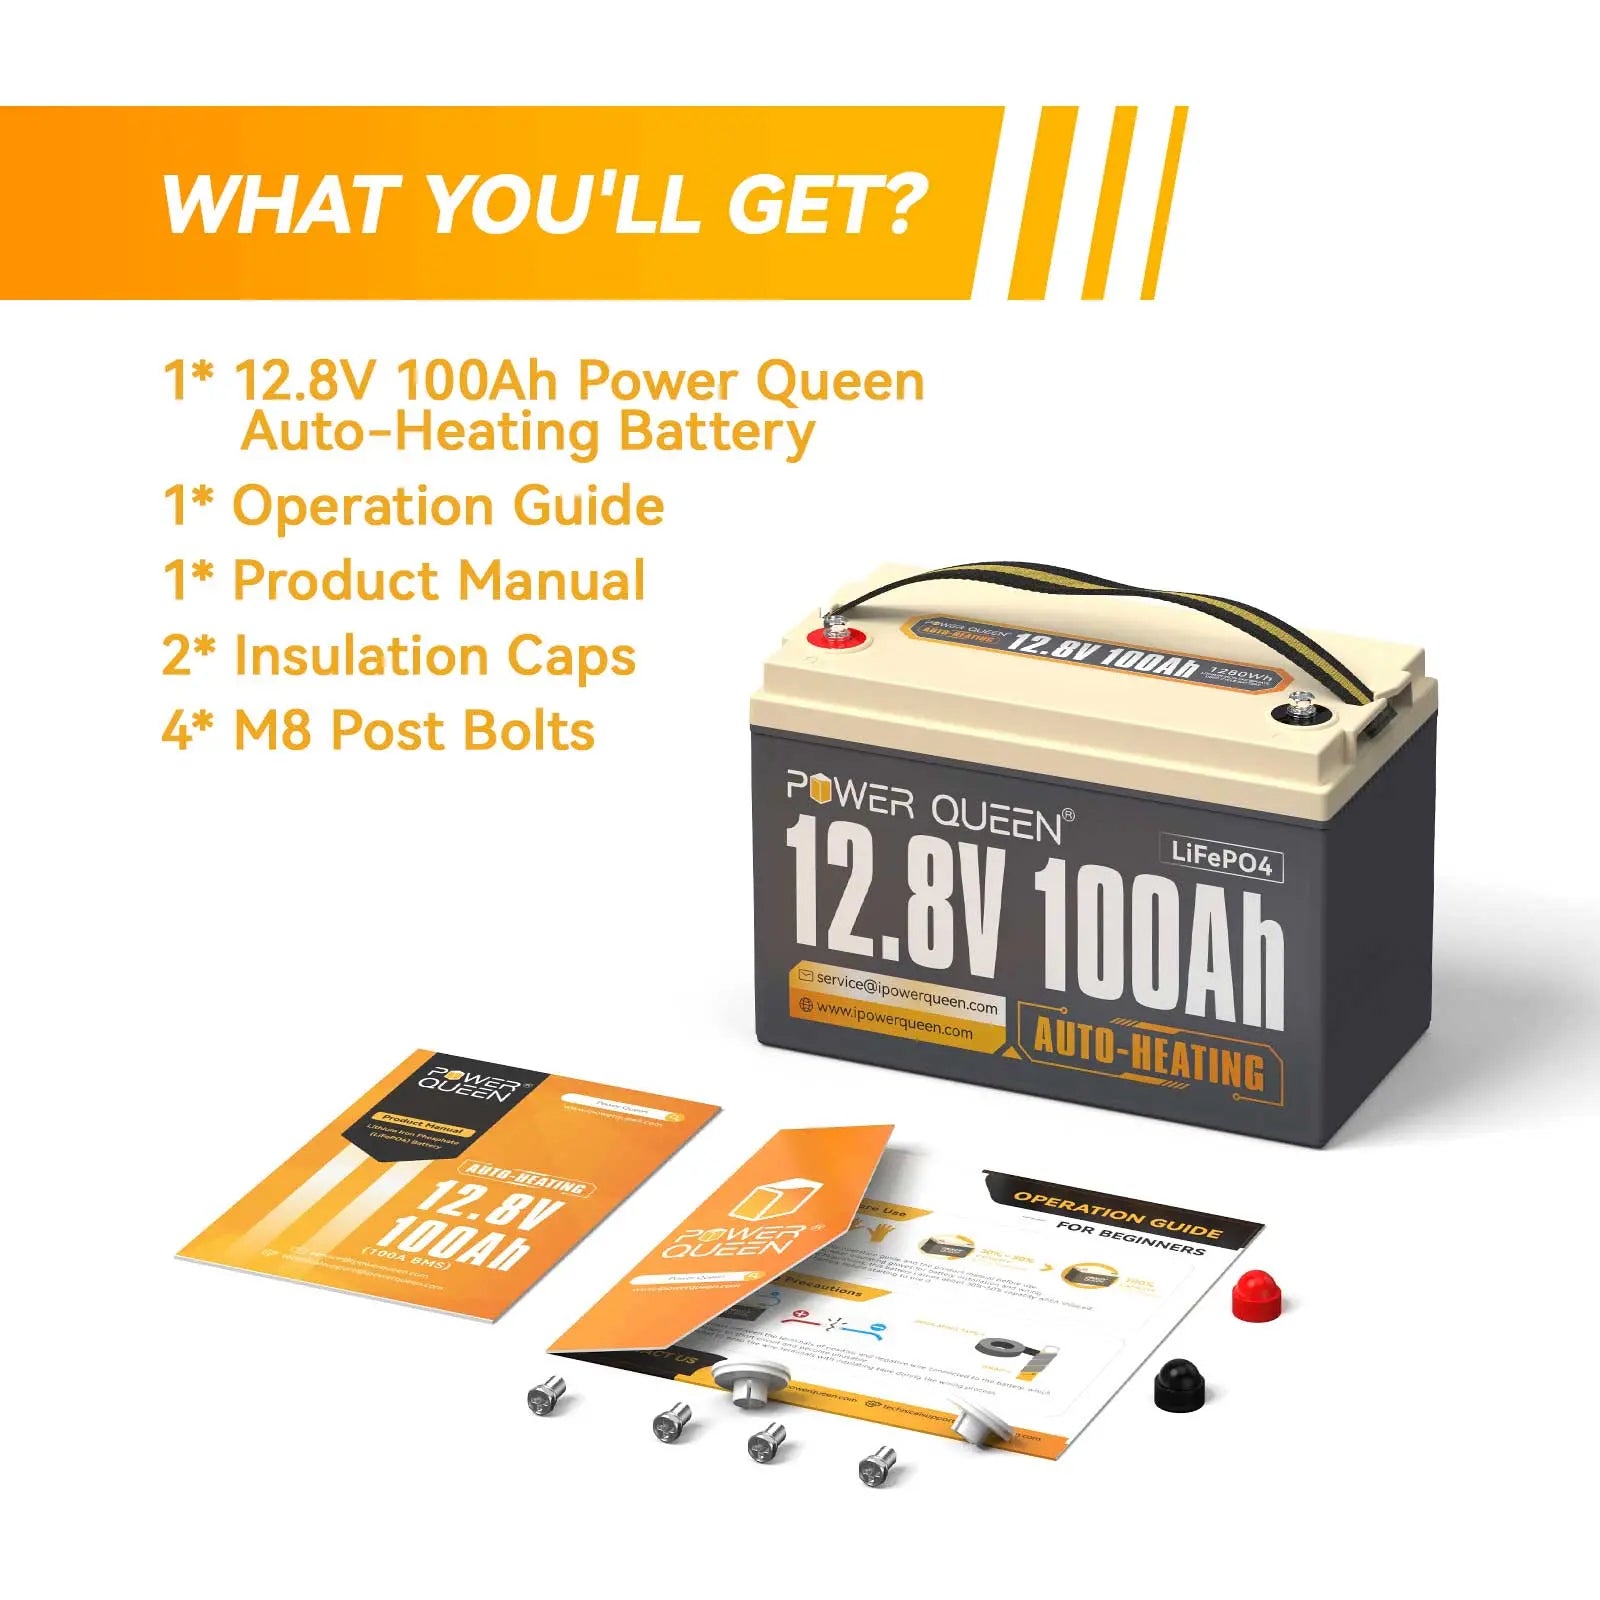 Power Queen 12.8V 100Ah Self-heating Lithium Battery, Built-In 100A BMS freeshipping - Power Queen